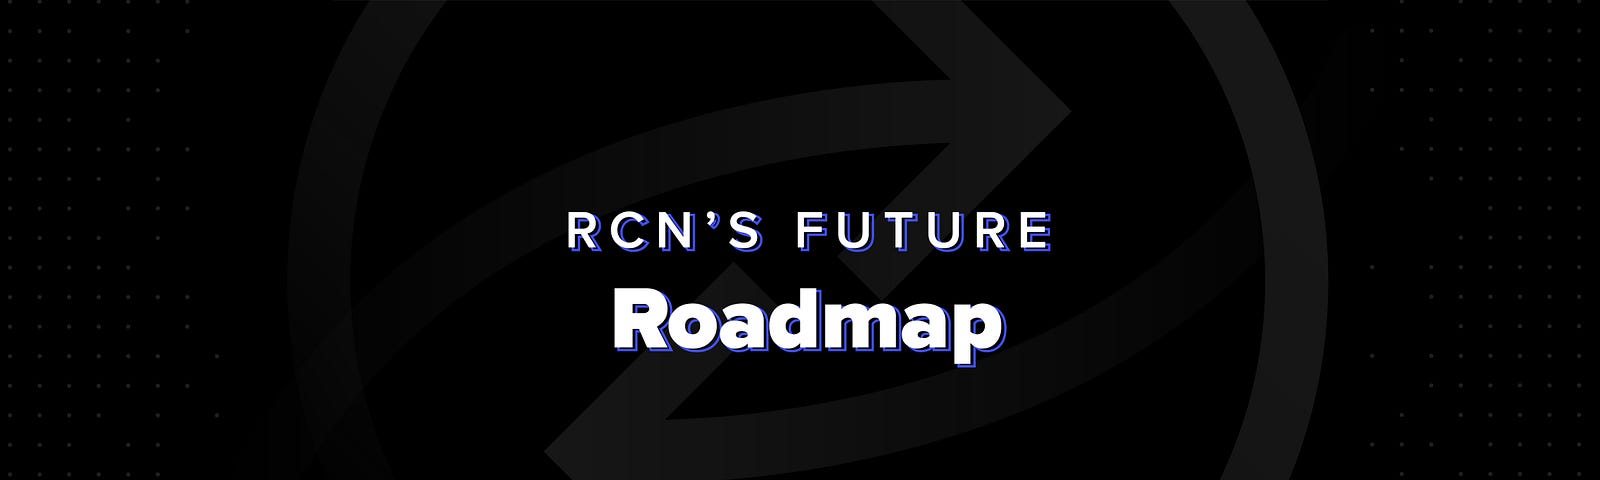 RCN’s New Development Roadmap.